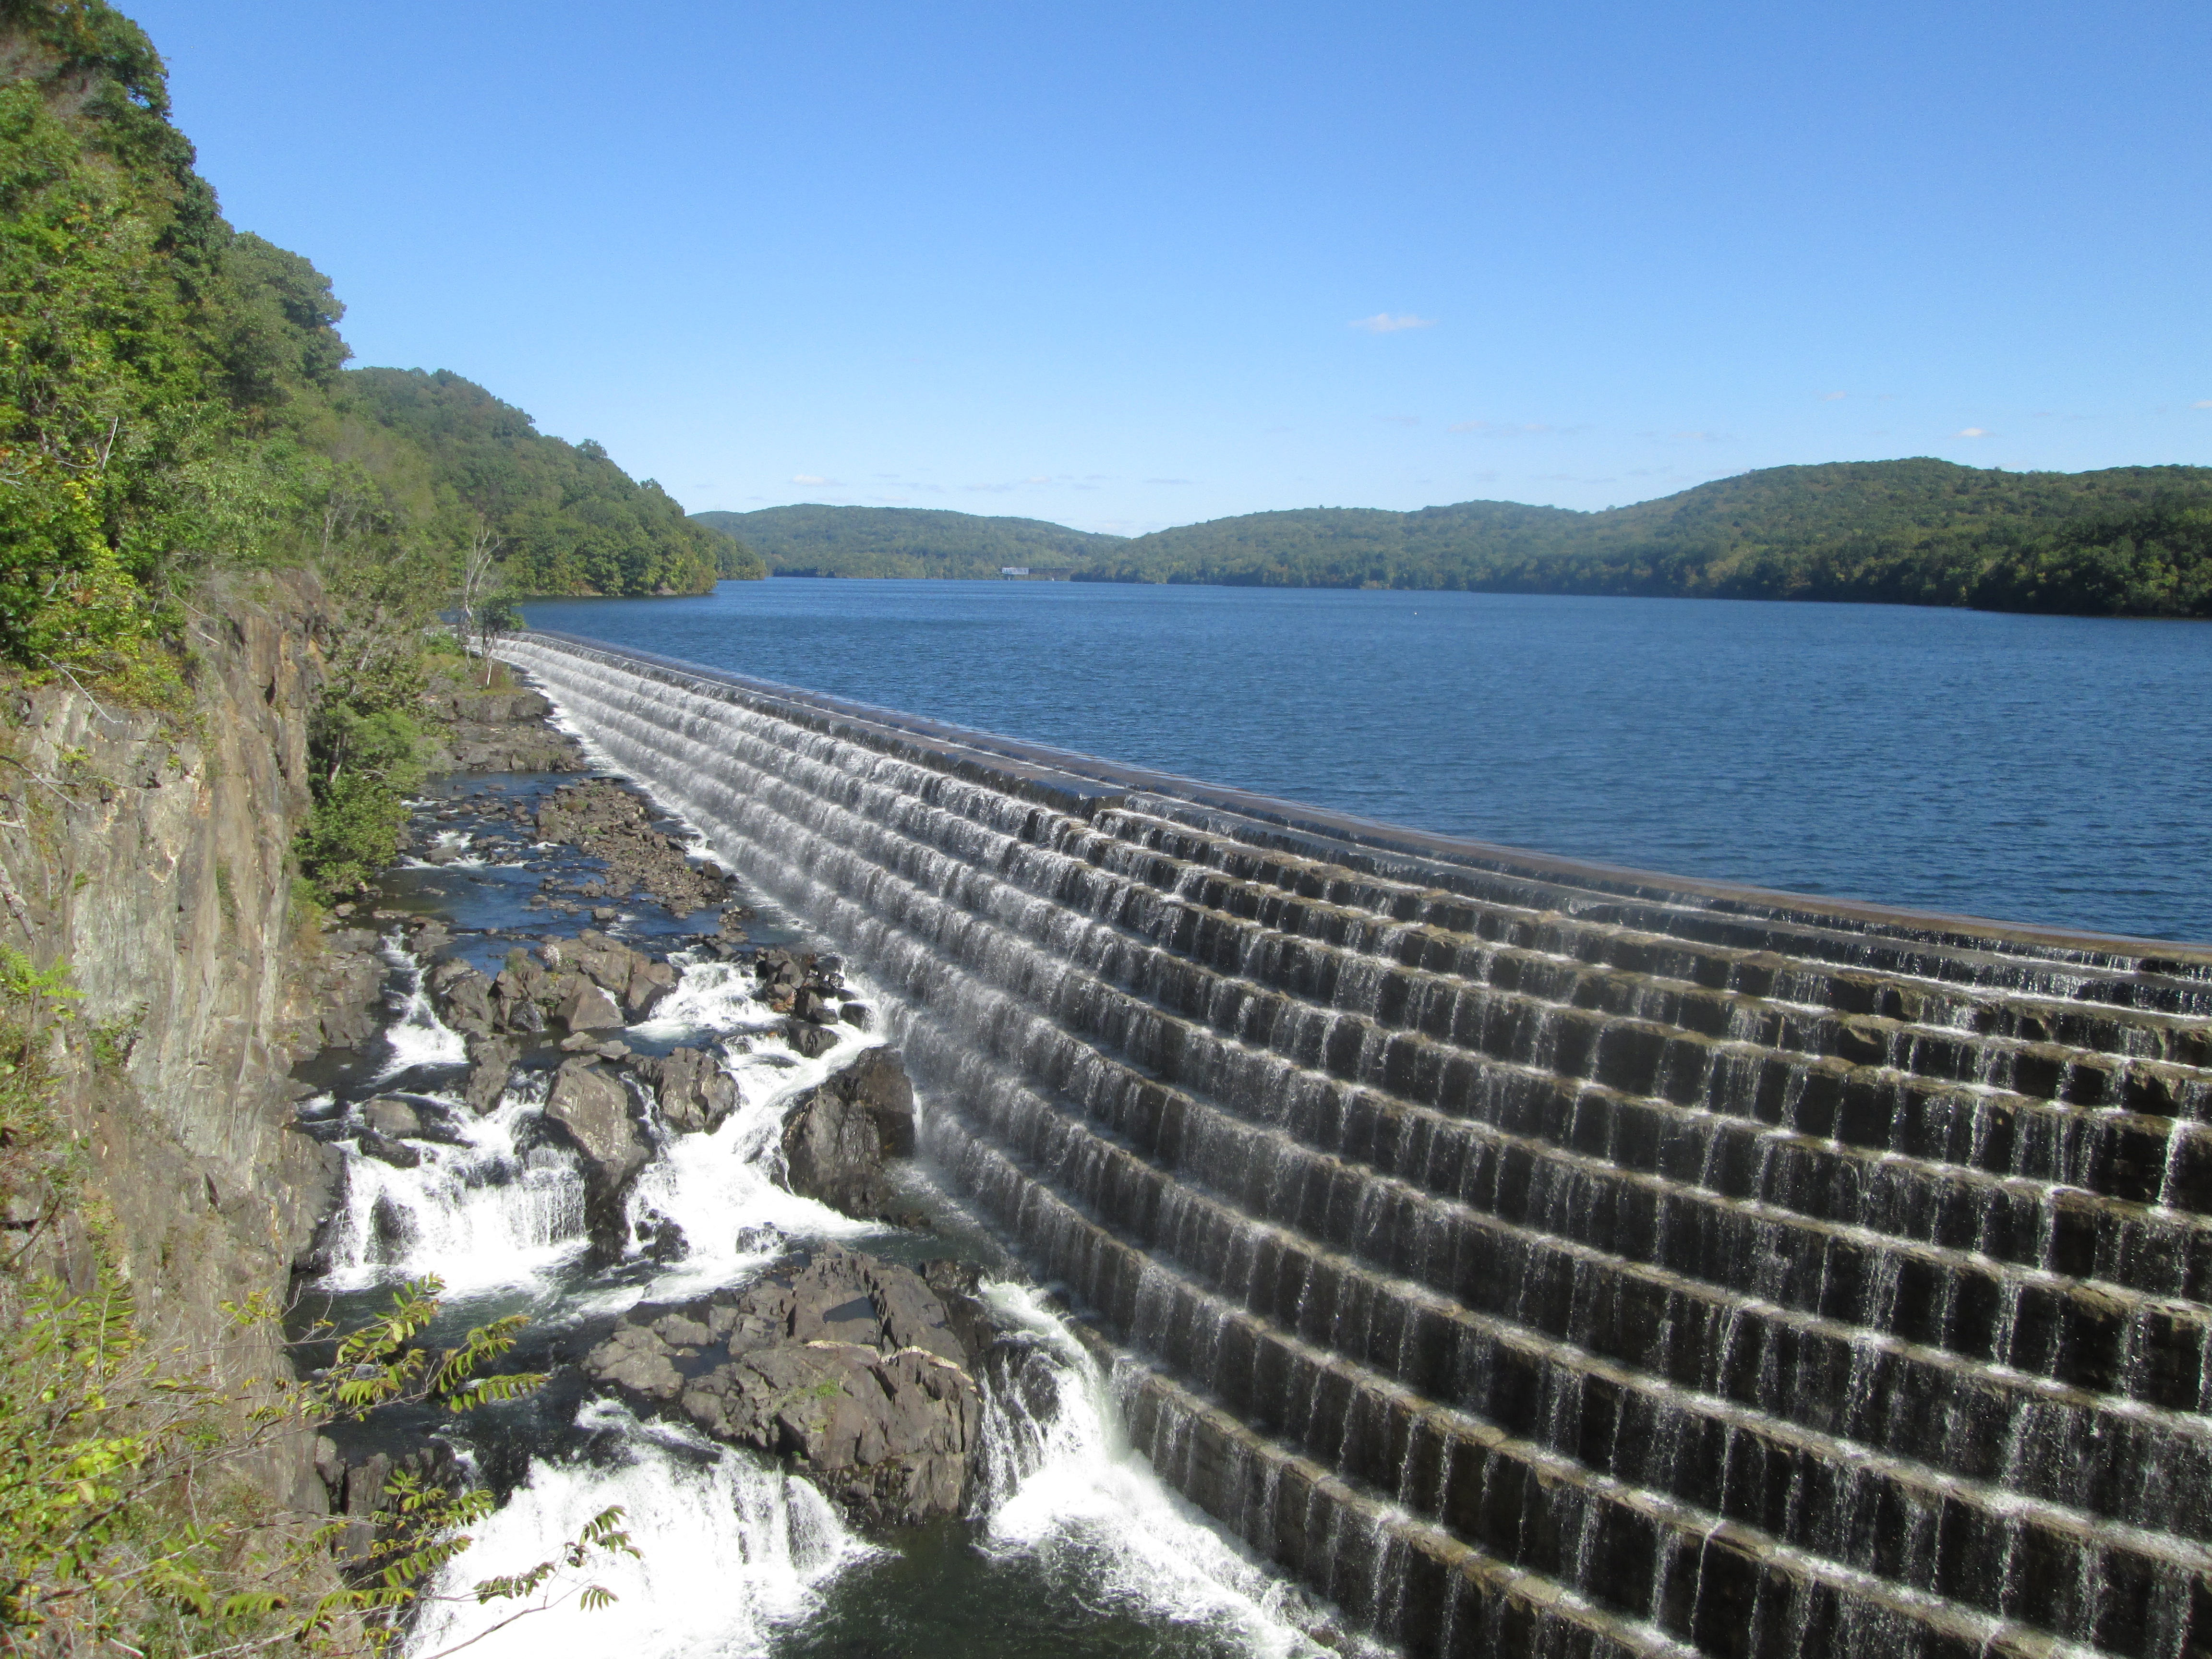 Spillway at the New Croton Dam Photo: Jane Daniels